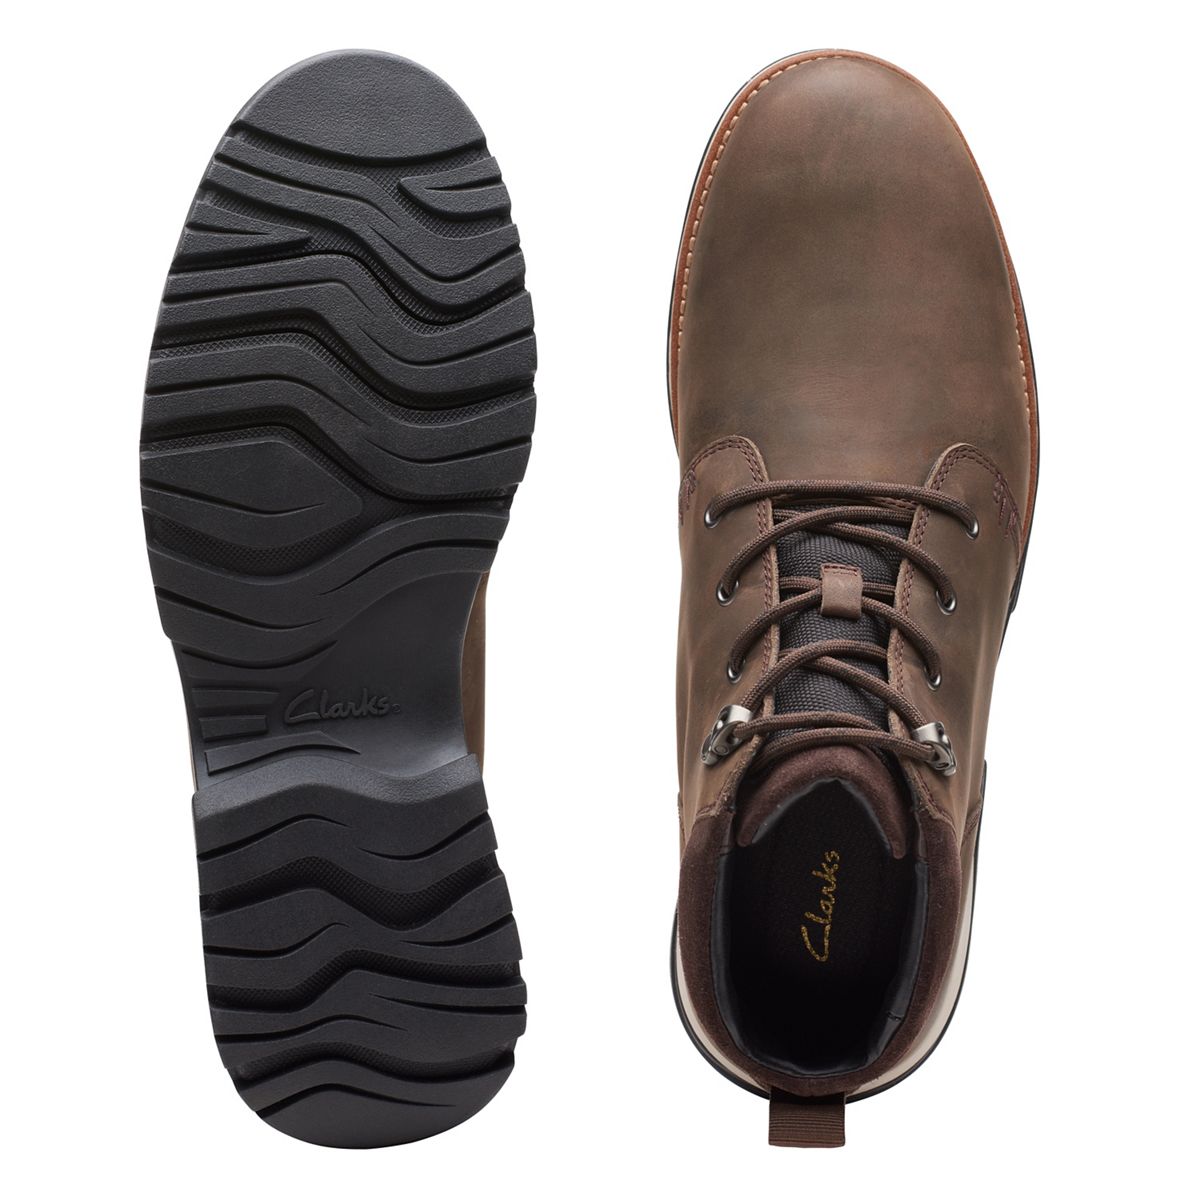 topton mid goretex men boot clarks dark brown top and bottom sole